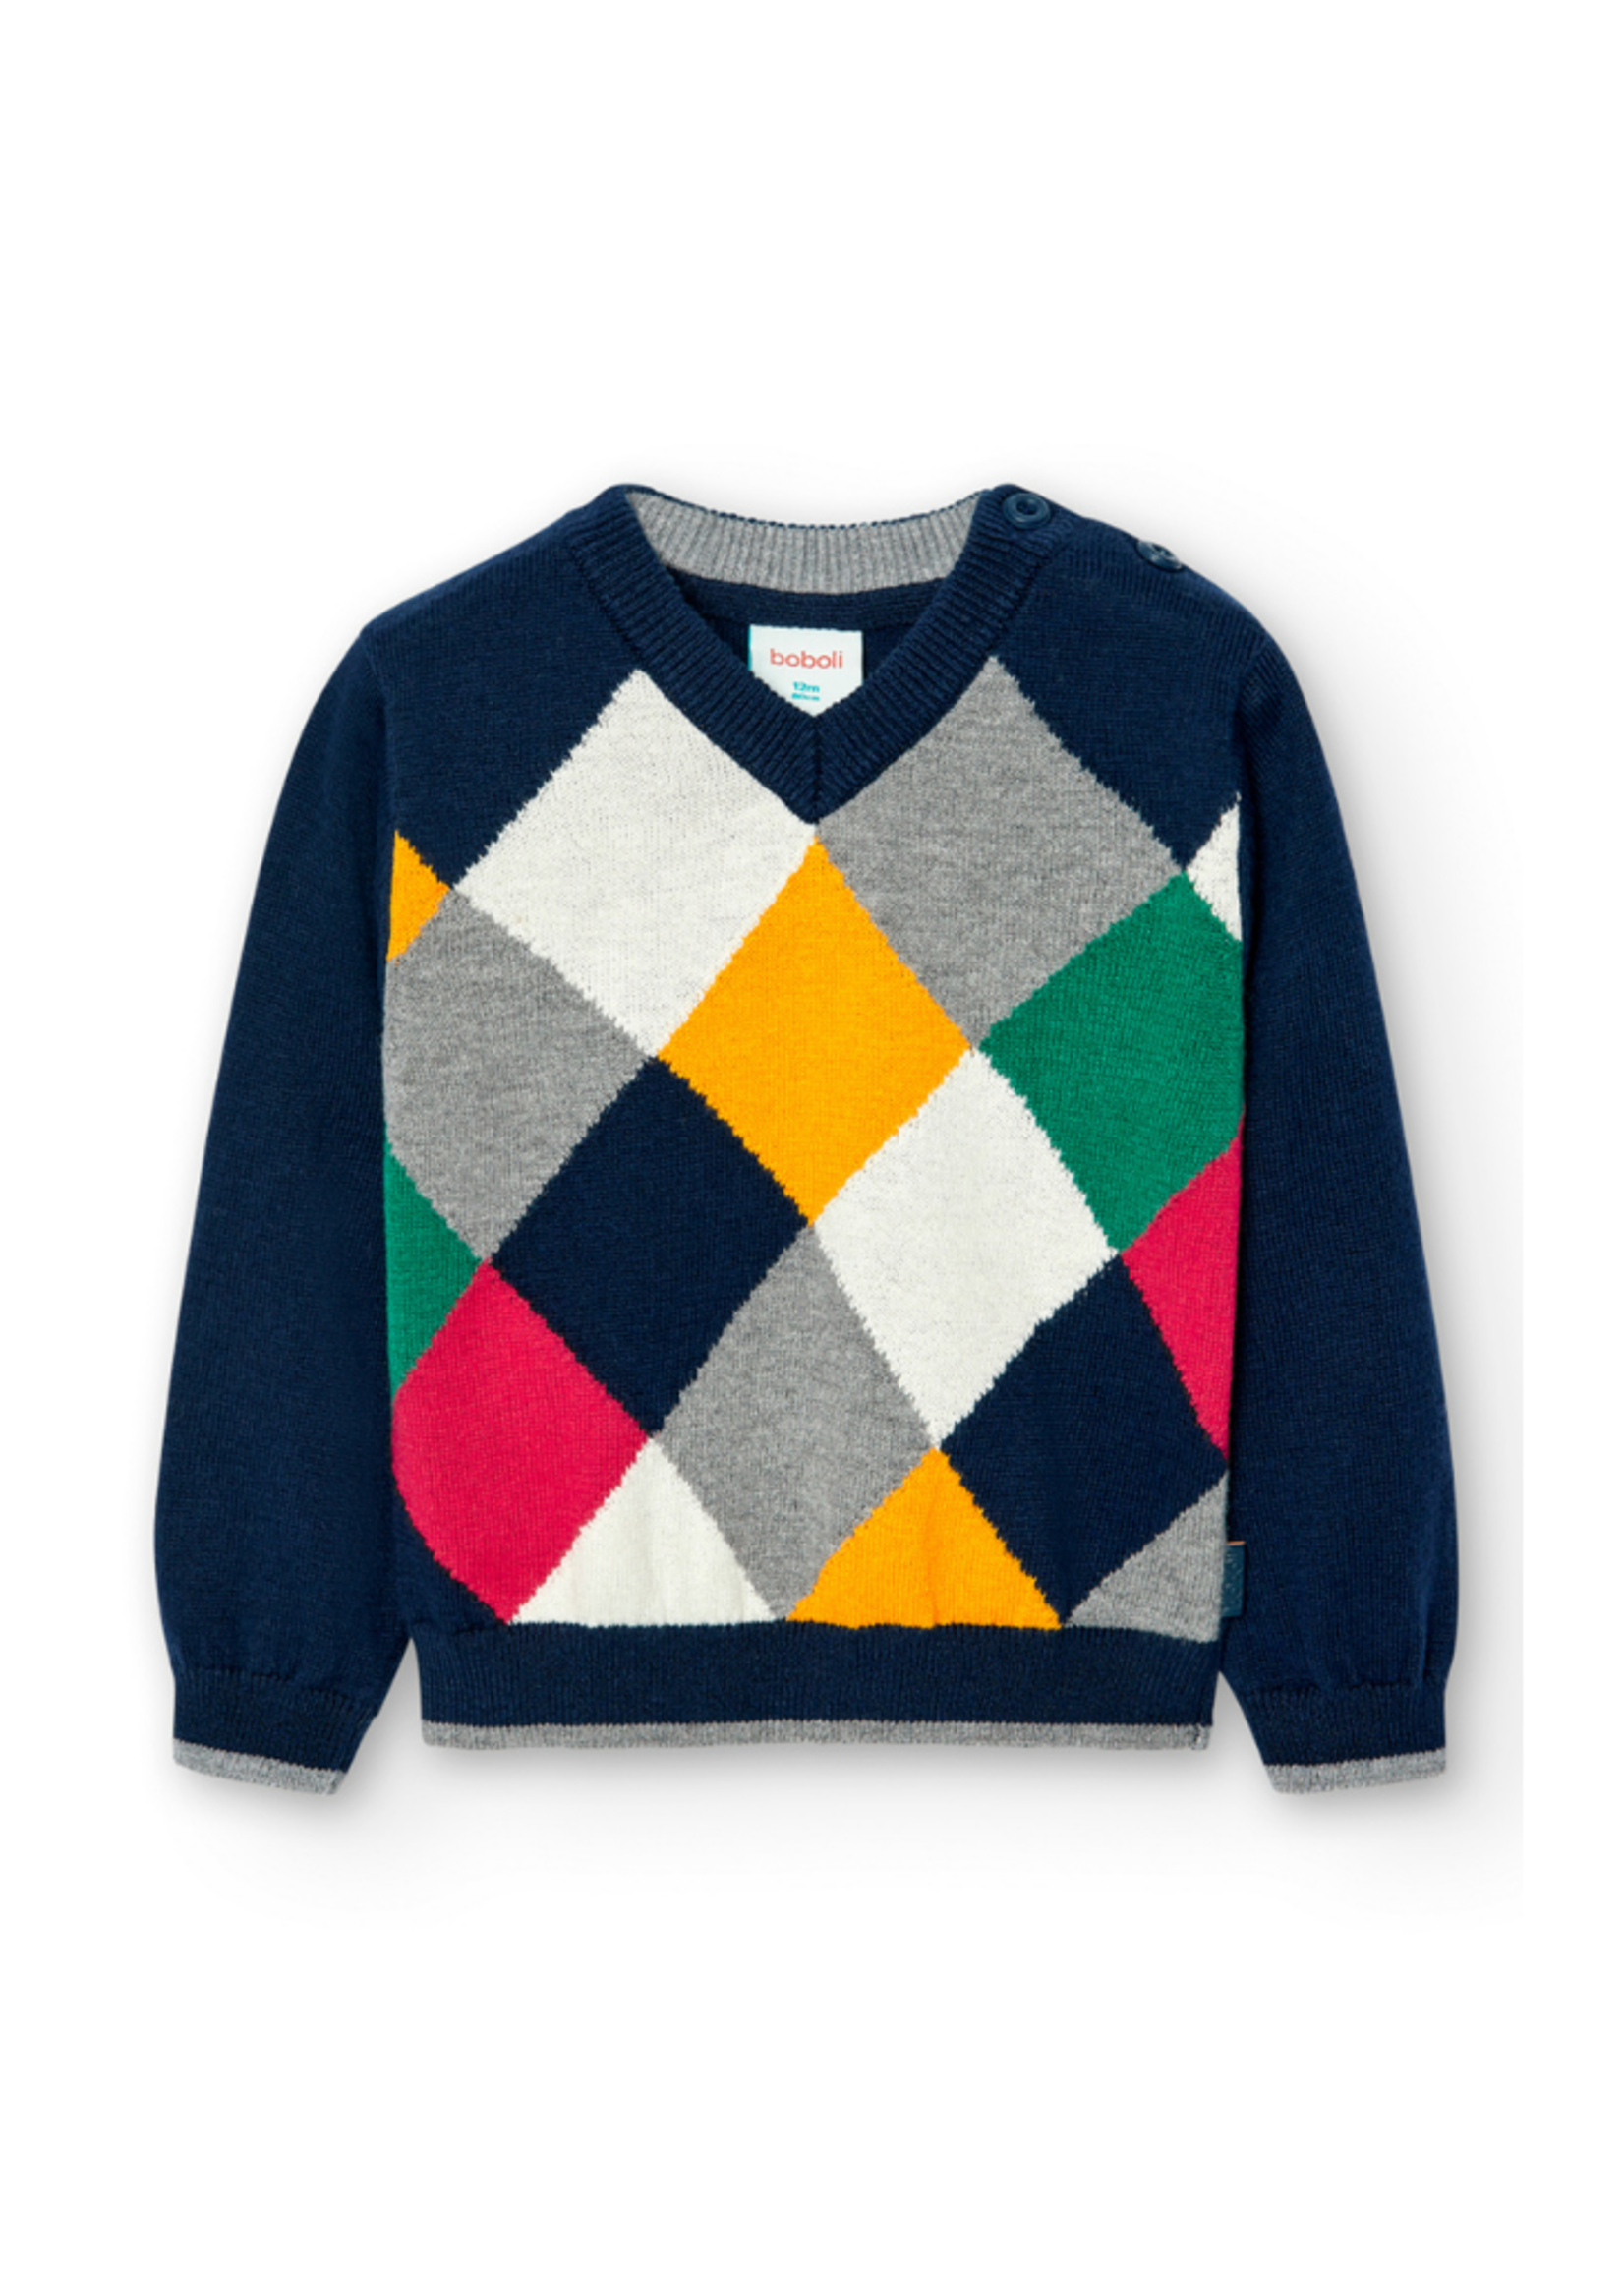 Boboli Benji Sweater